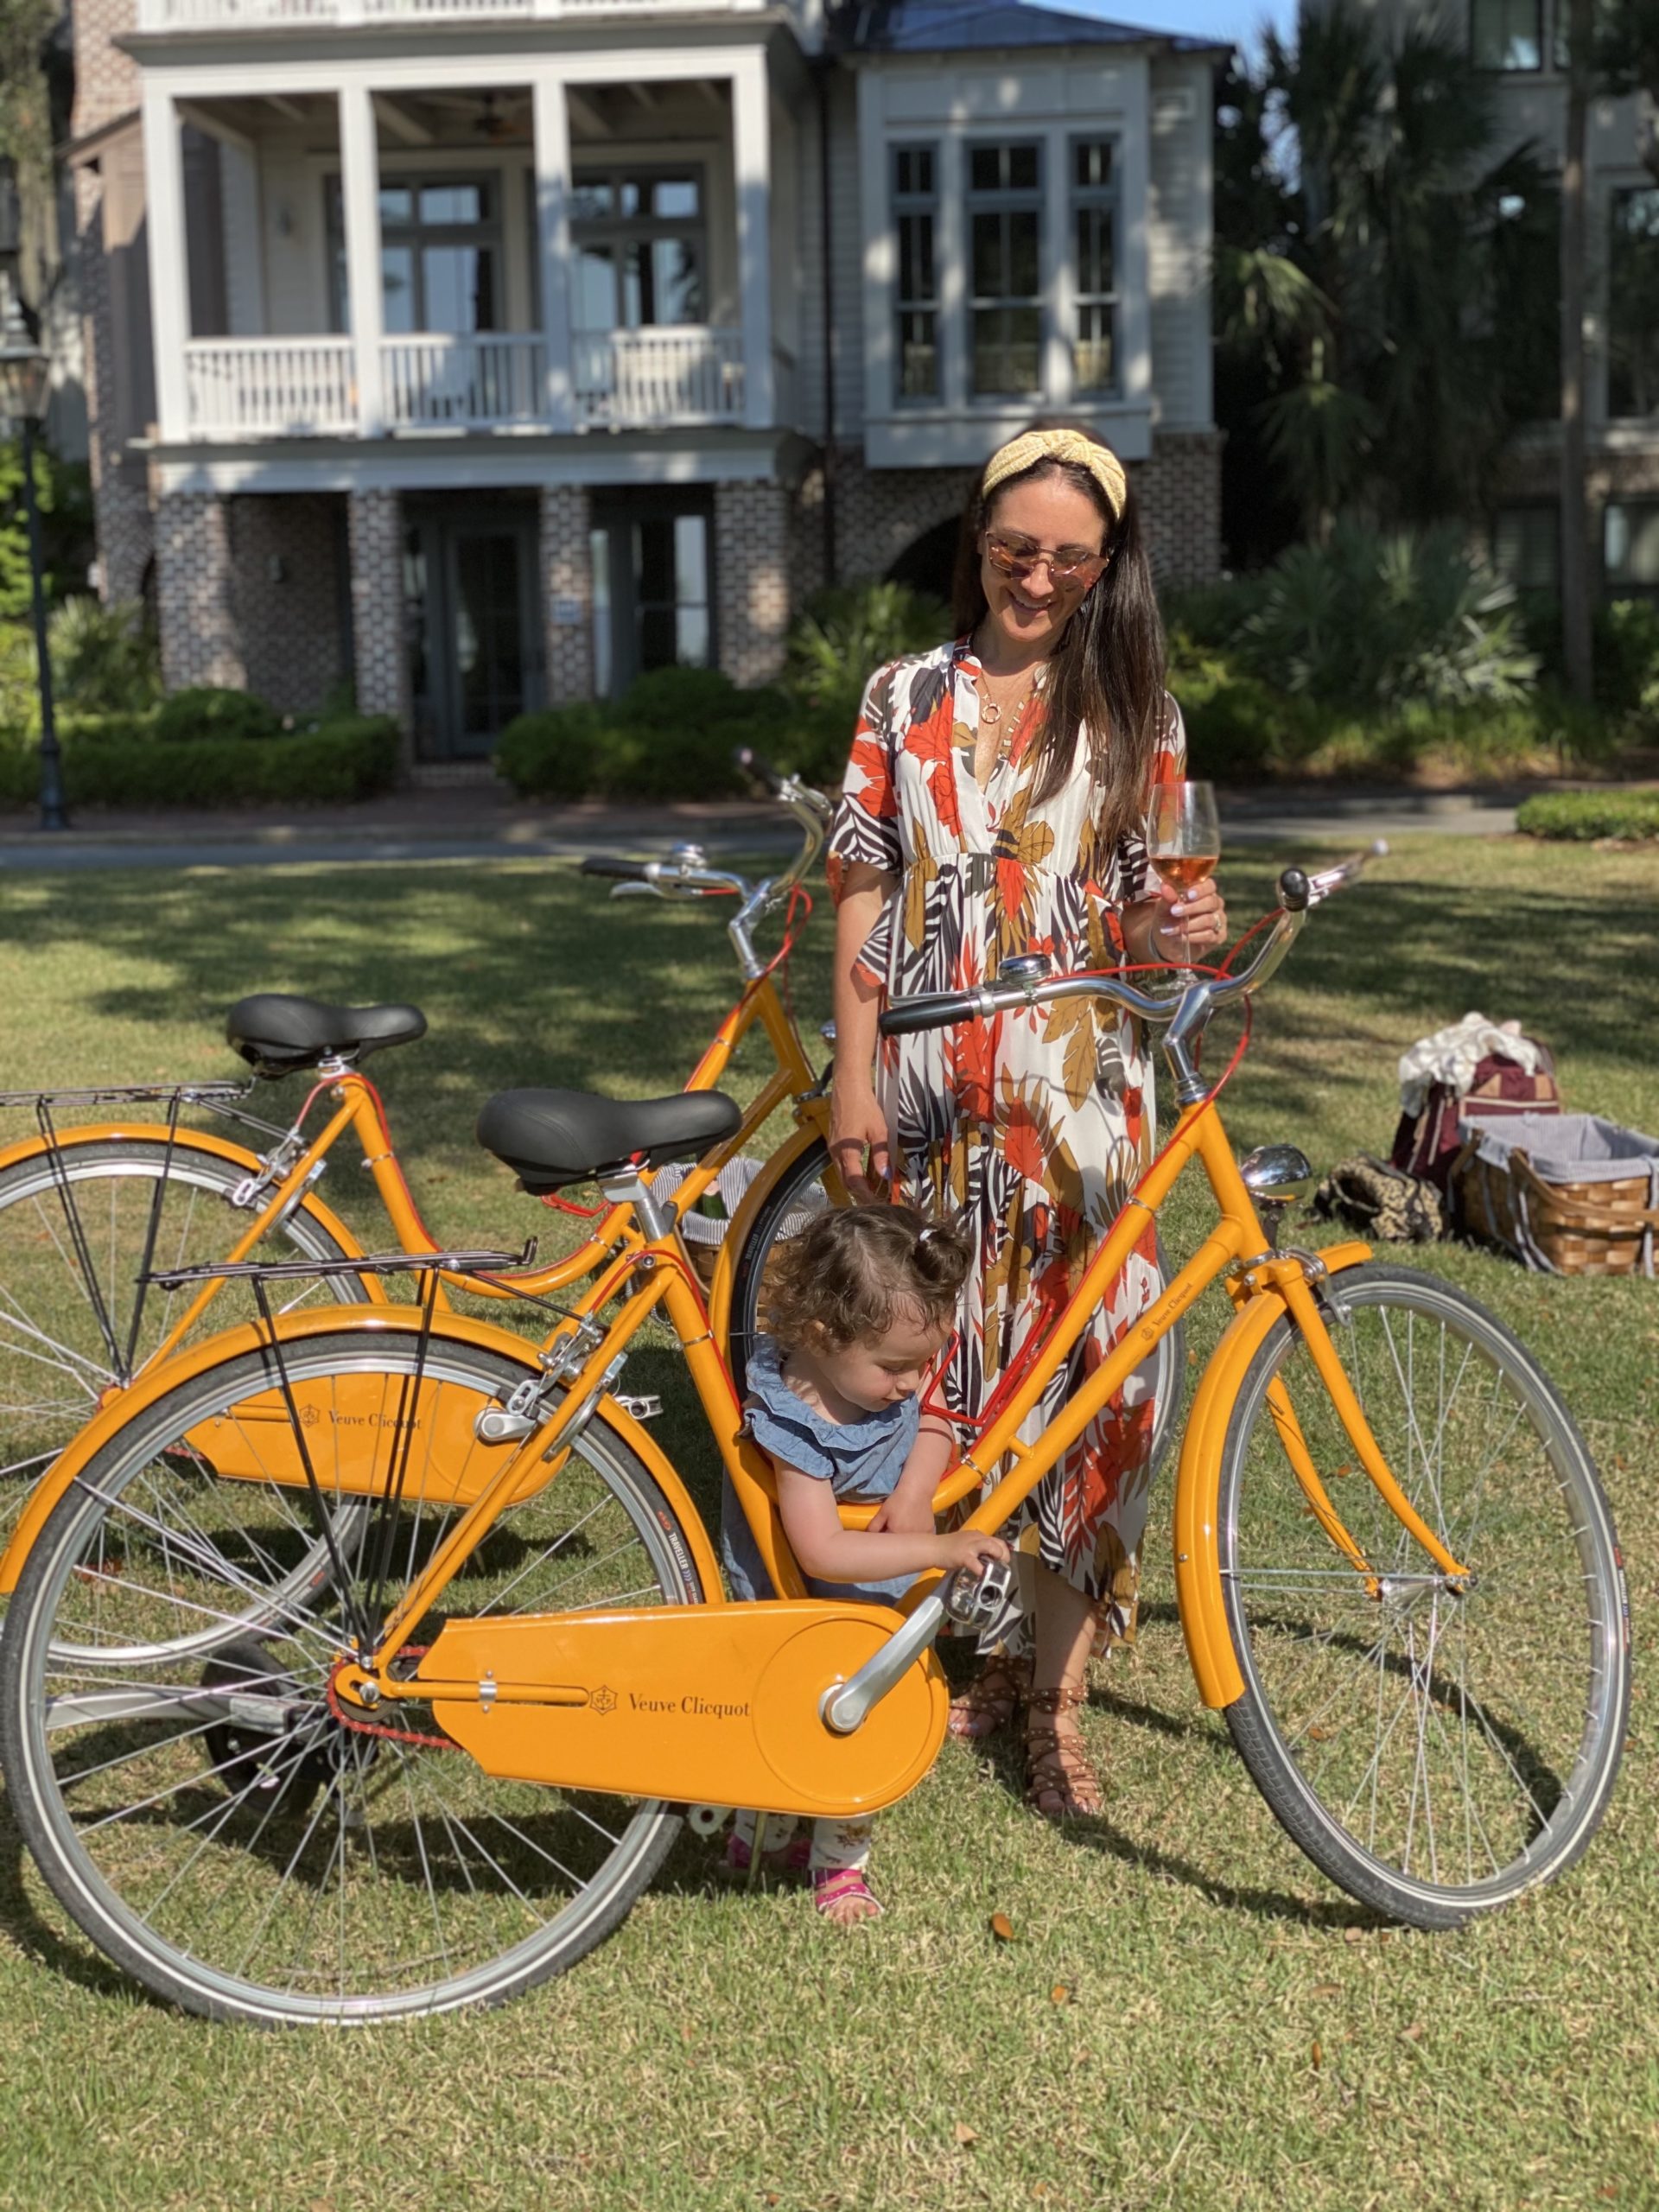 South Carolina Family Vacation | Holistic Hot | Palmetto Bluff Veuve Cliquot Picnic and pedal 